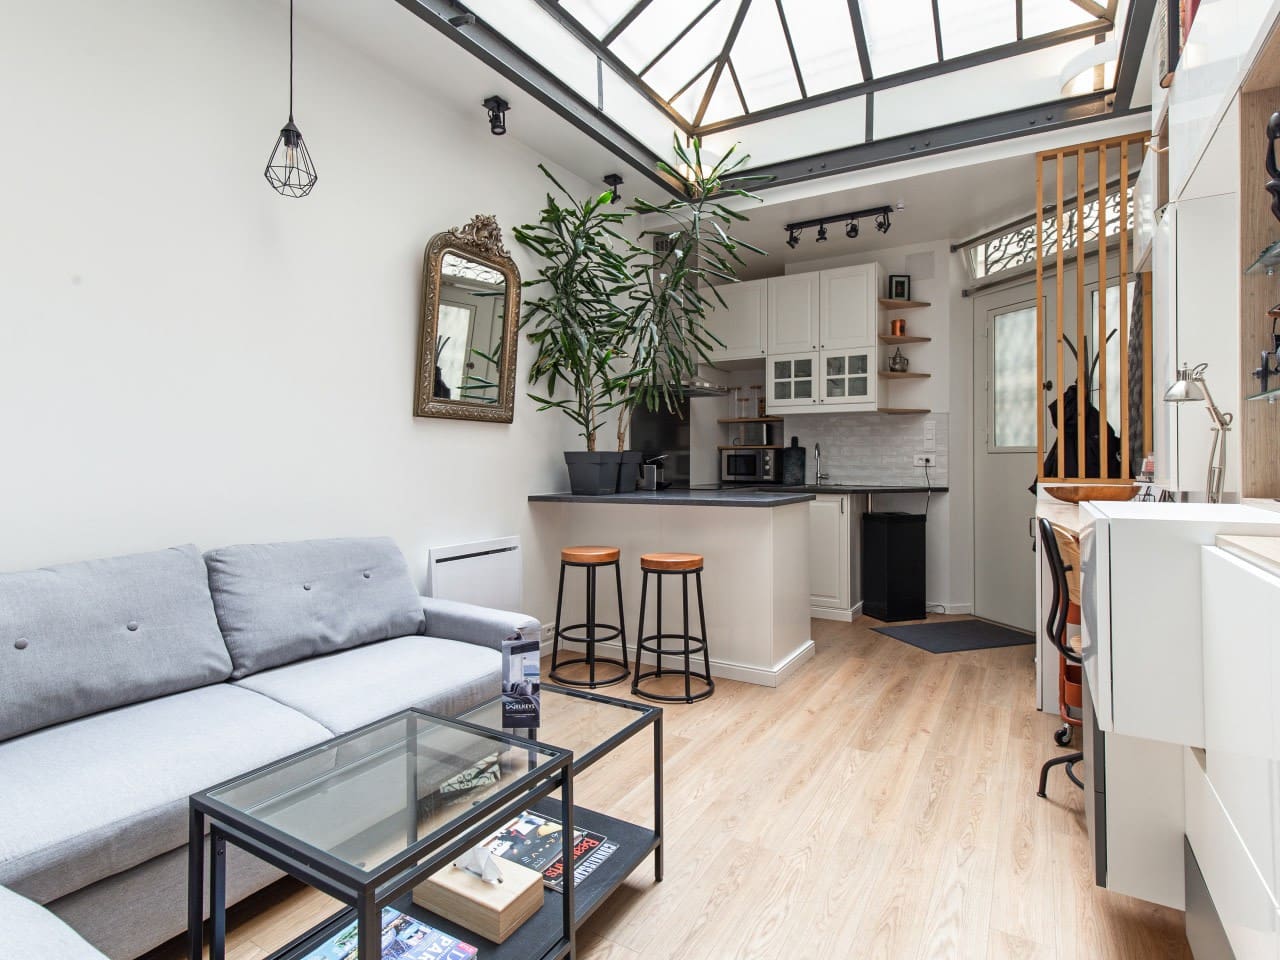 Airbnbs in Paris